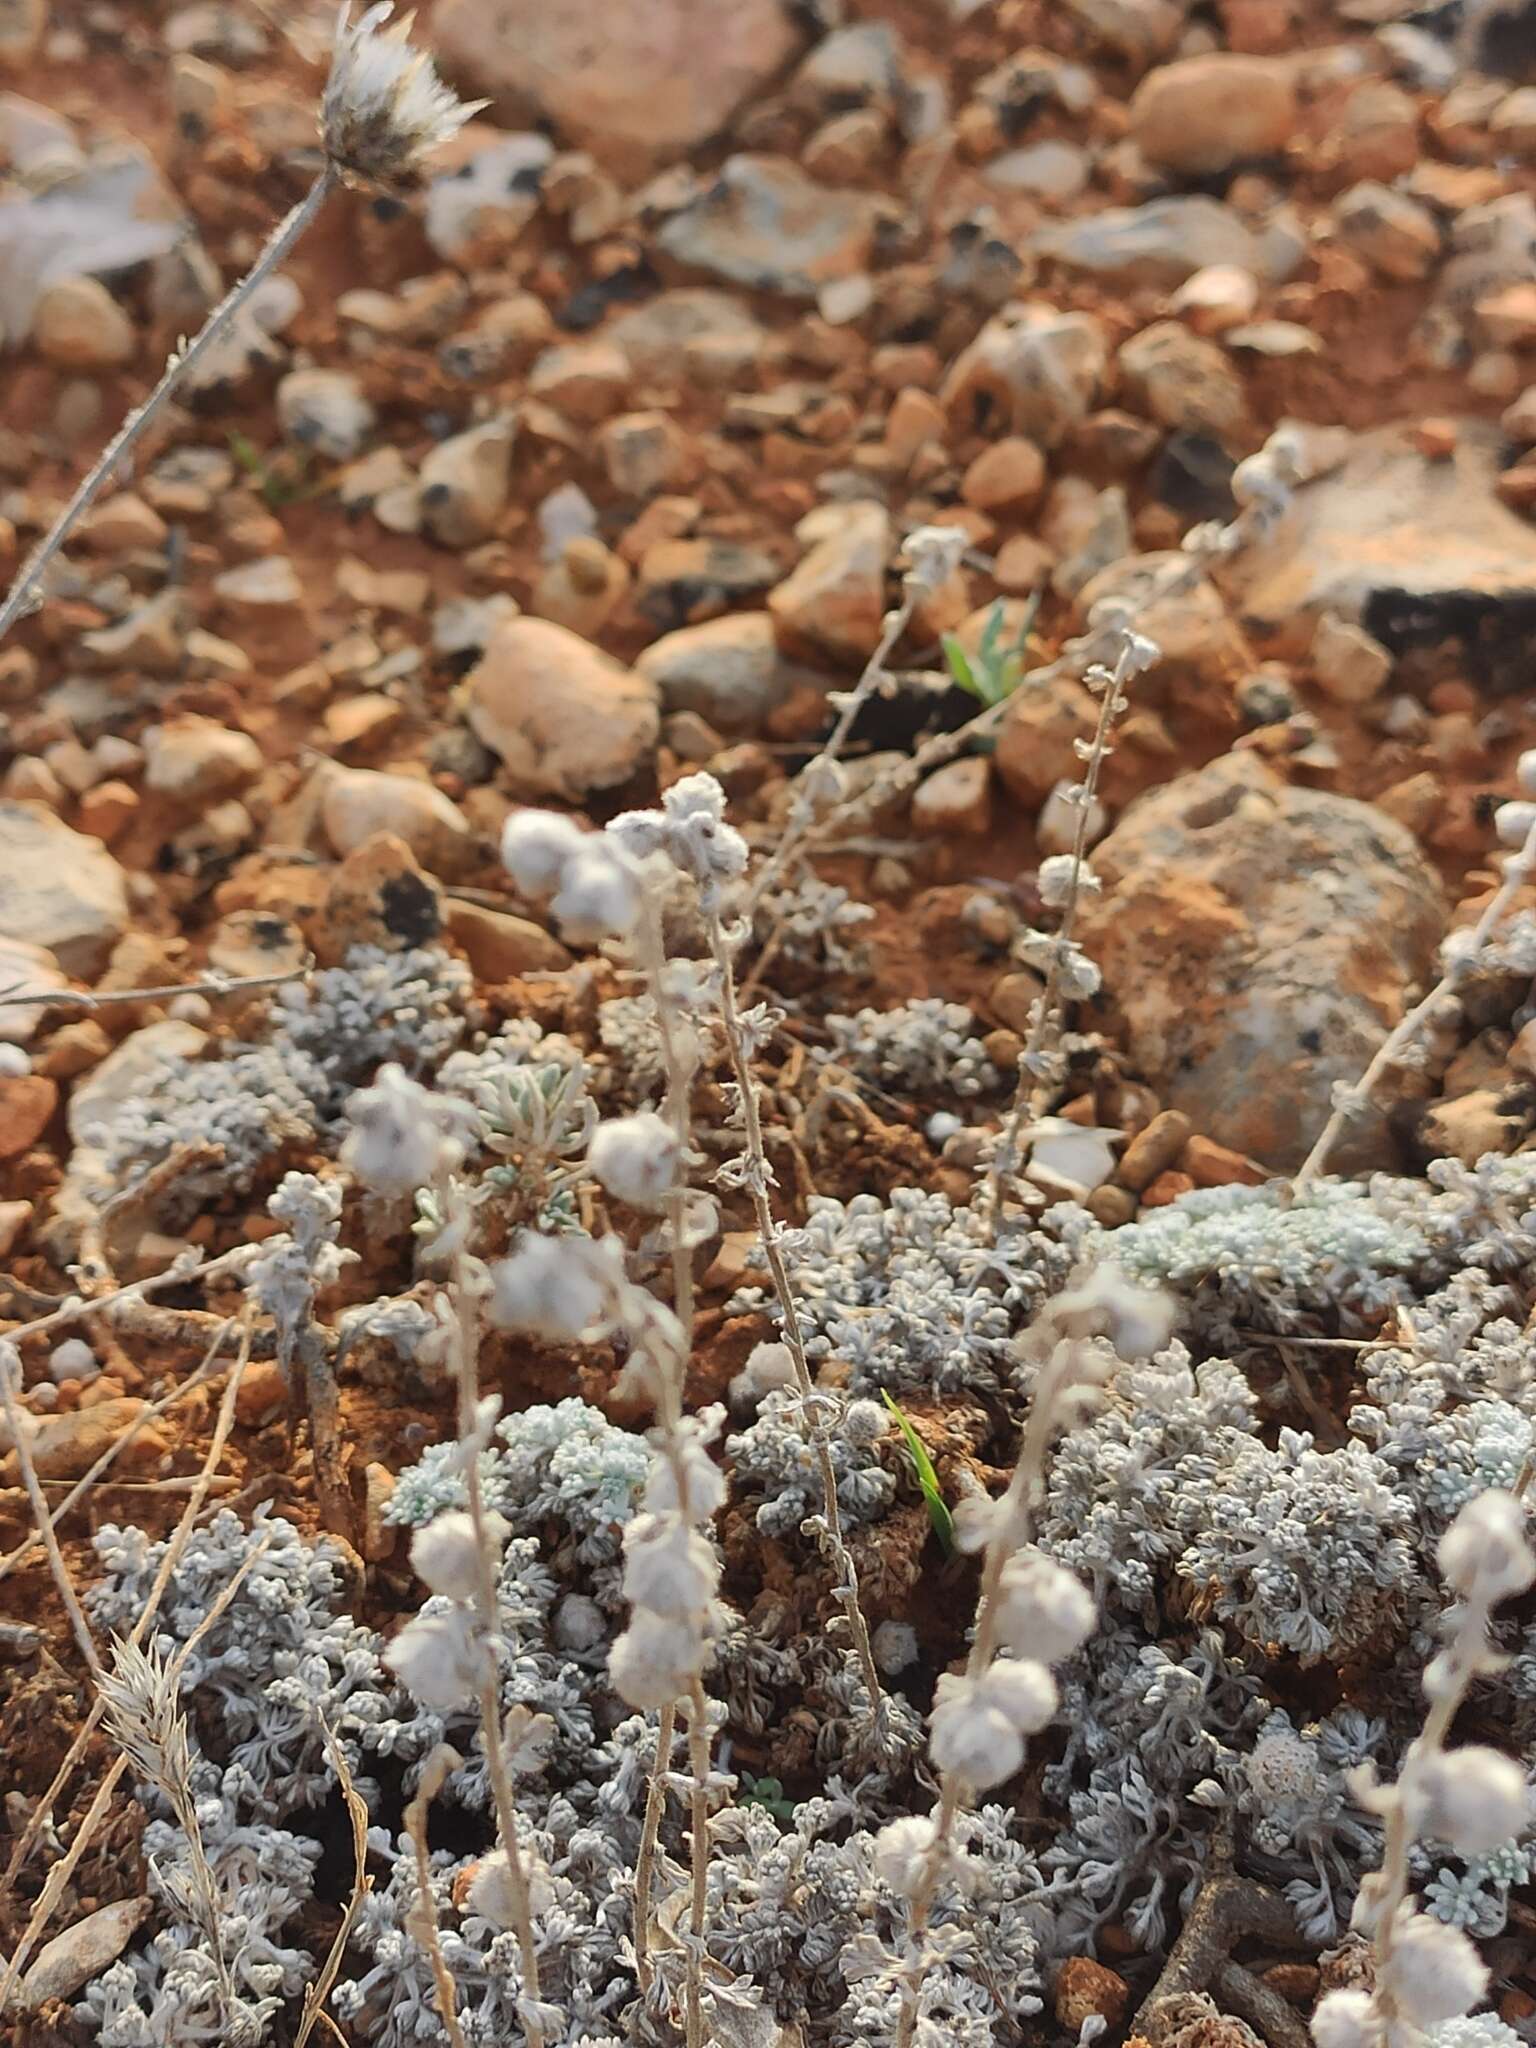 Image of Artemisia pedemontana subsp. assoana (Willk.) Rivas Mart.